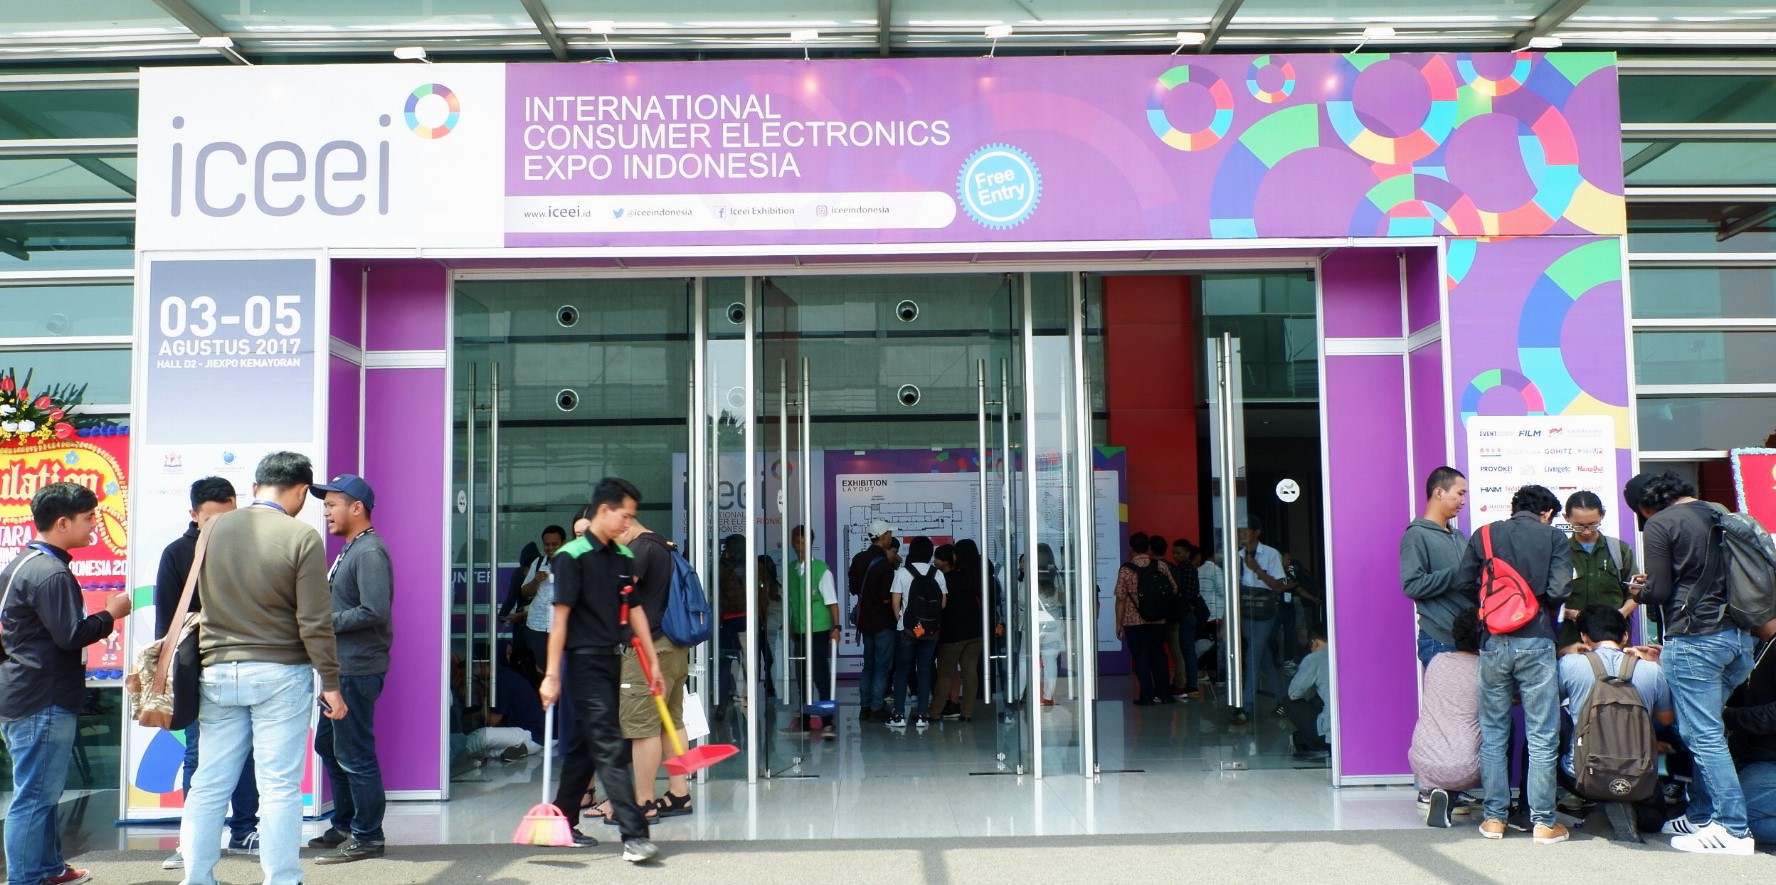 MNC Play Masuk di International Consumer Electronics Expo Indonesia 2017